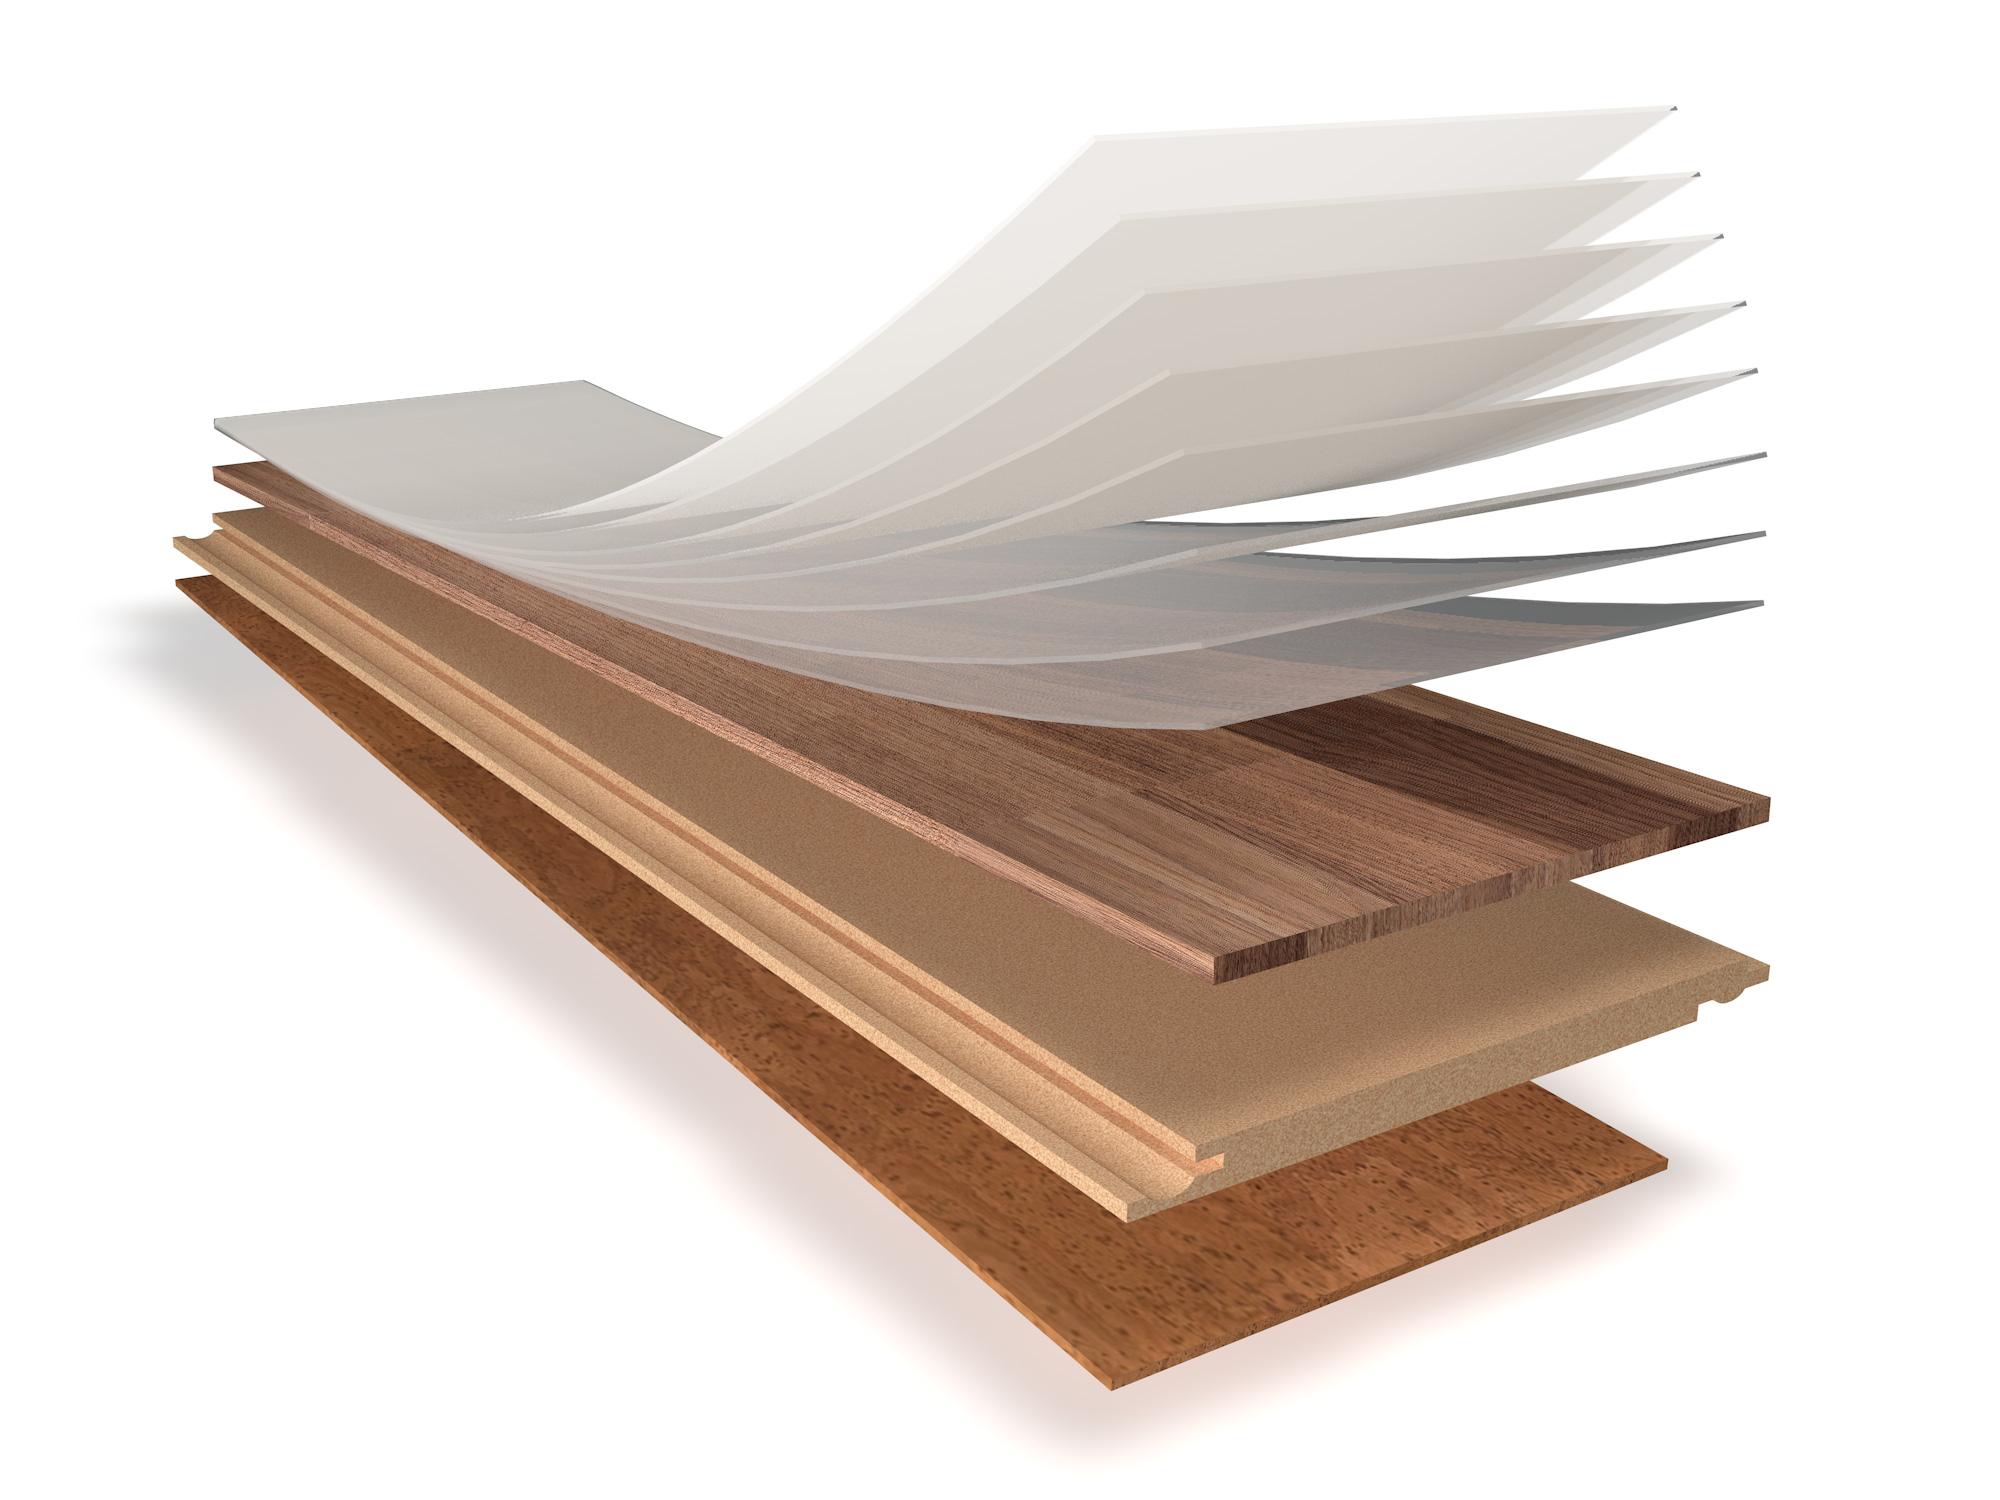 3D image of a Flexura wooden floor board